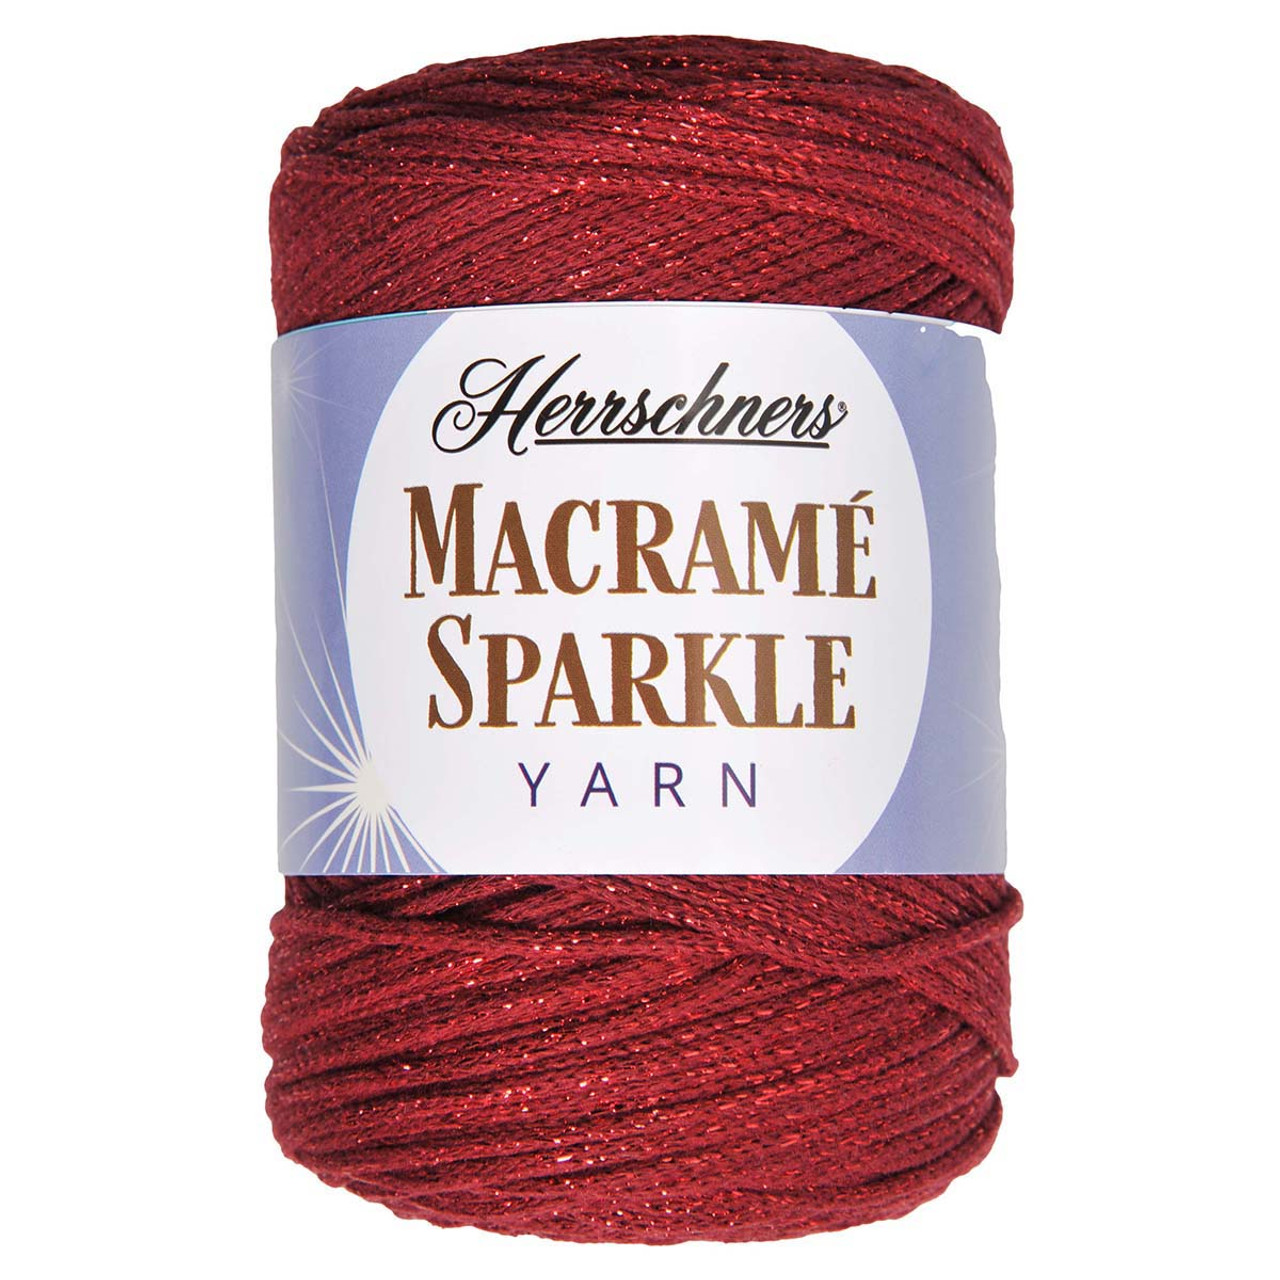 Herrschners Macrame Sparkle Yarn